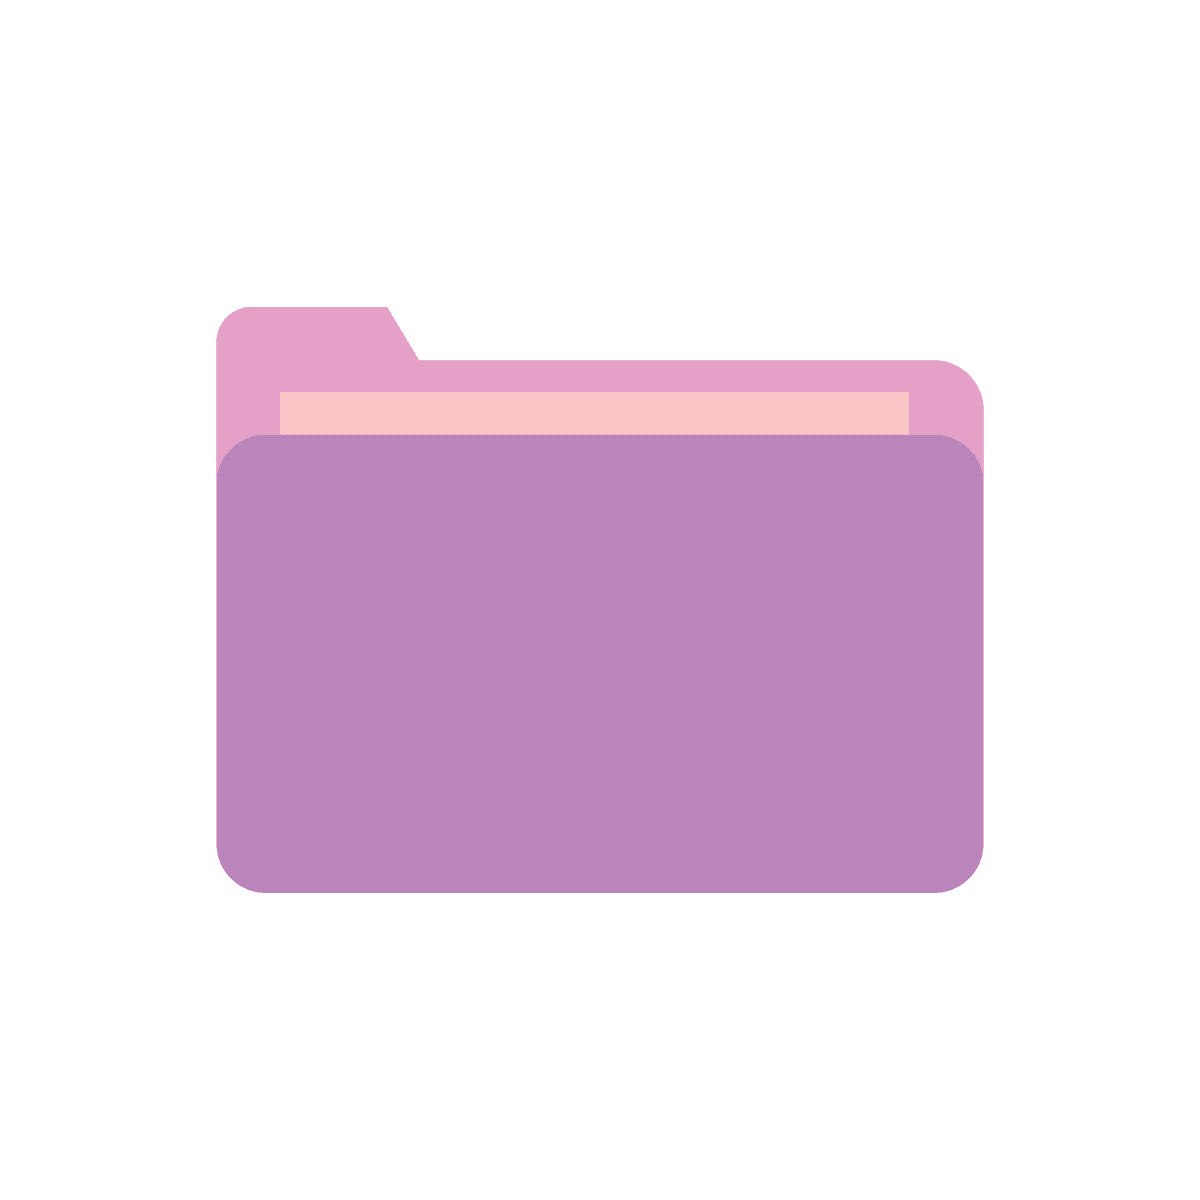 elegant document folder icon with monochrome style